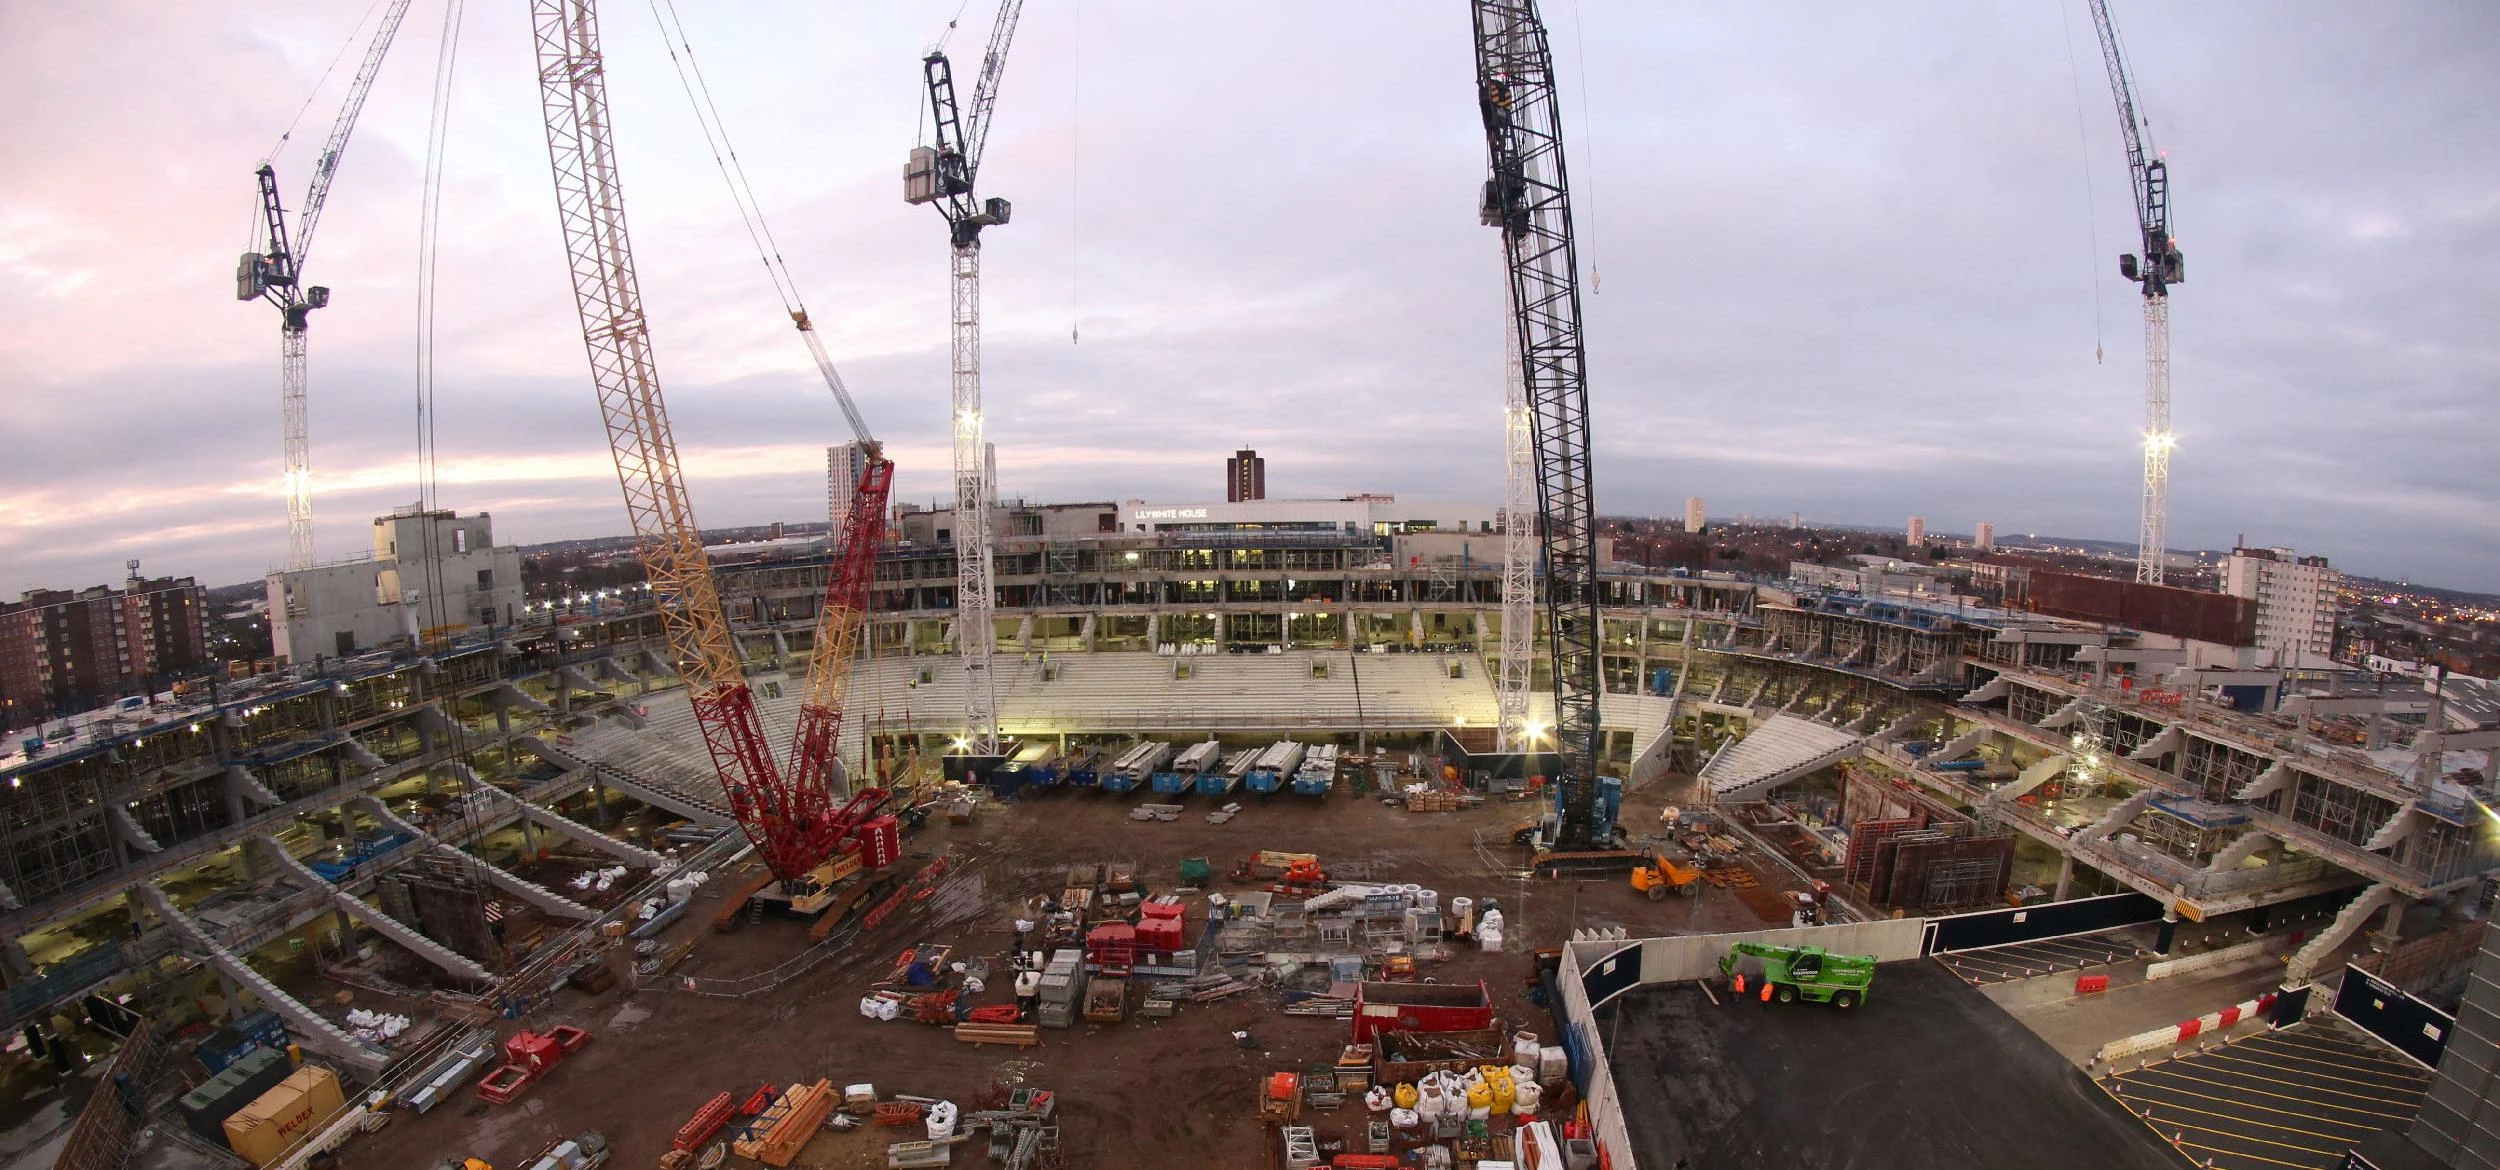 Latest images from Tottenham Hotspur's new stadium. Image: THFC